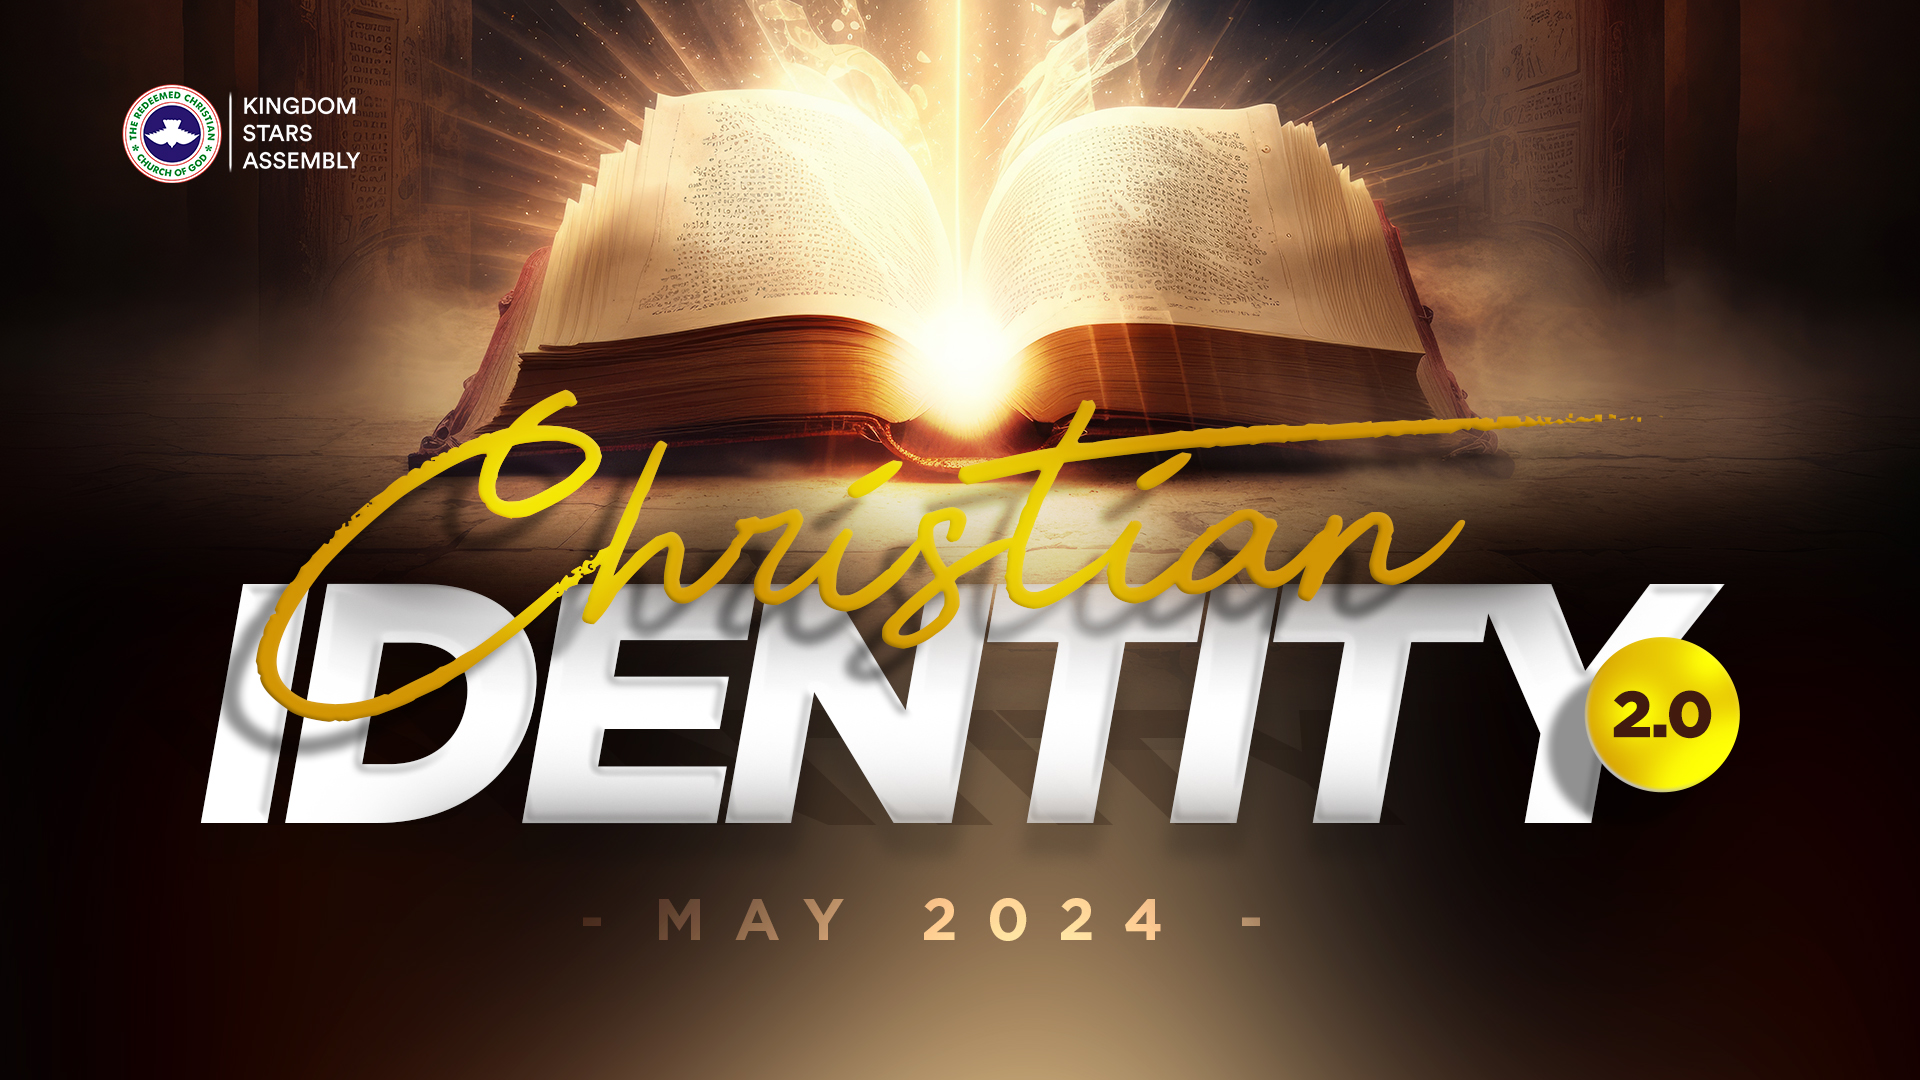 Christian Identity